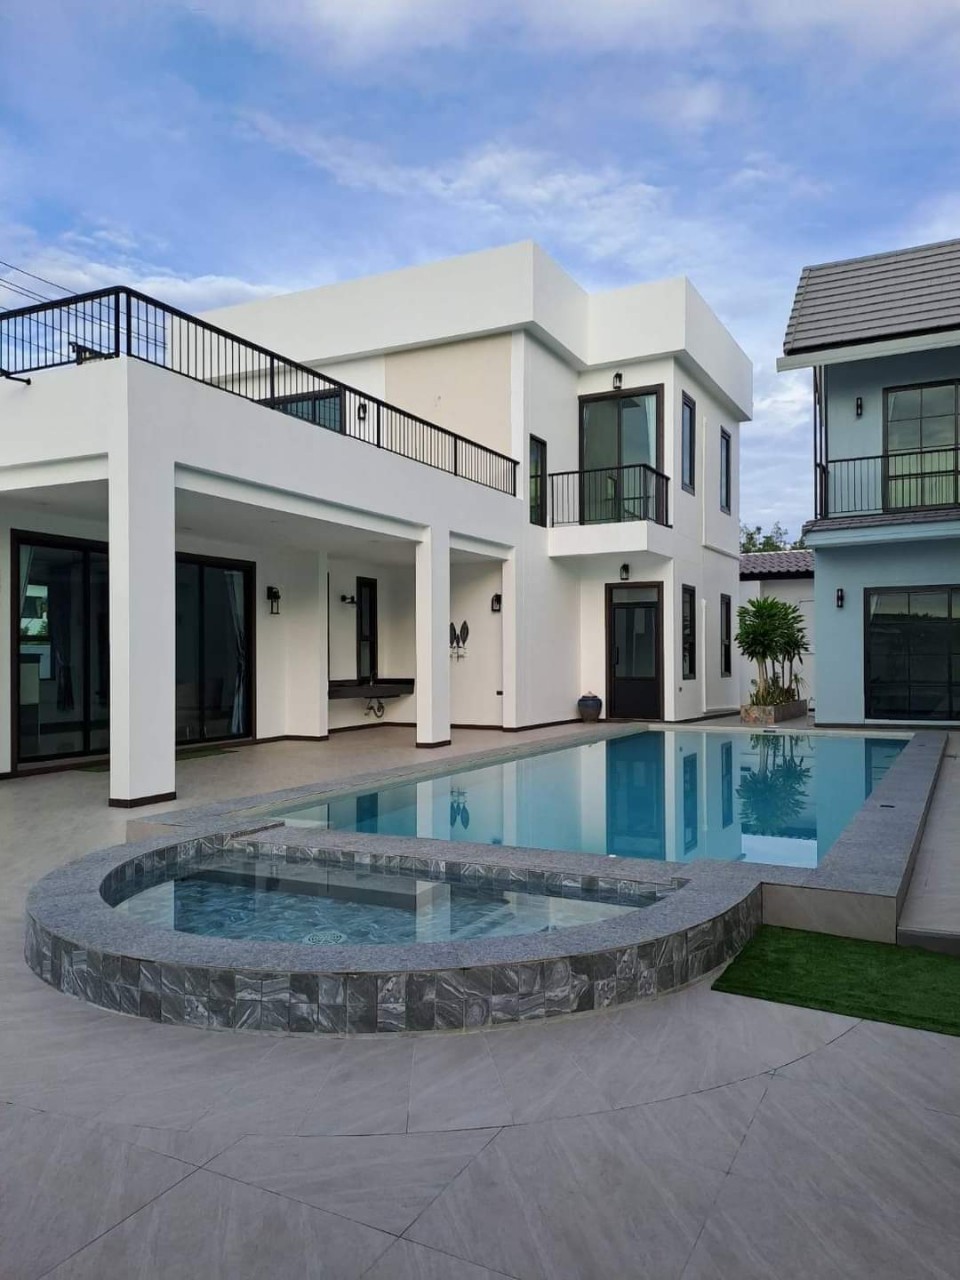 Phu Man Fah Resort Pool Villa for Sale and Rent  ตั้งอยู่ในพื้นที่ห้วยใหญ่, เหมาะสำหรับการทำพูลวิลล่า